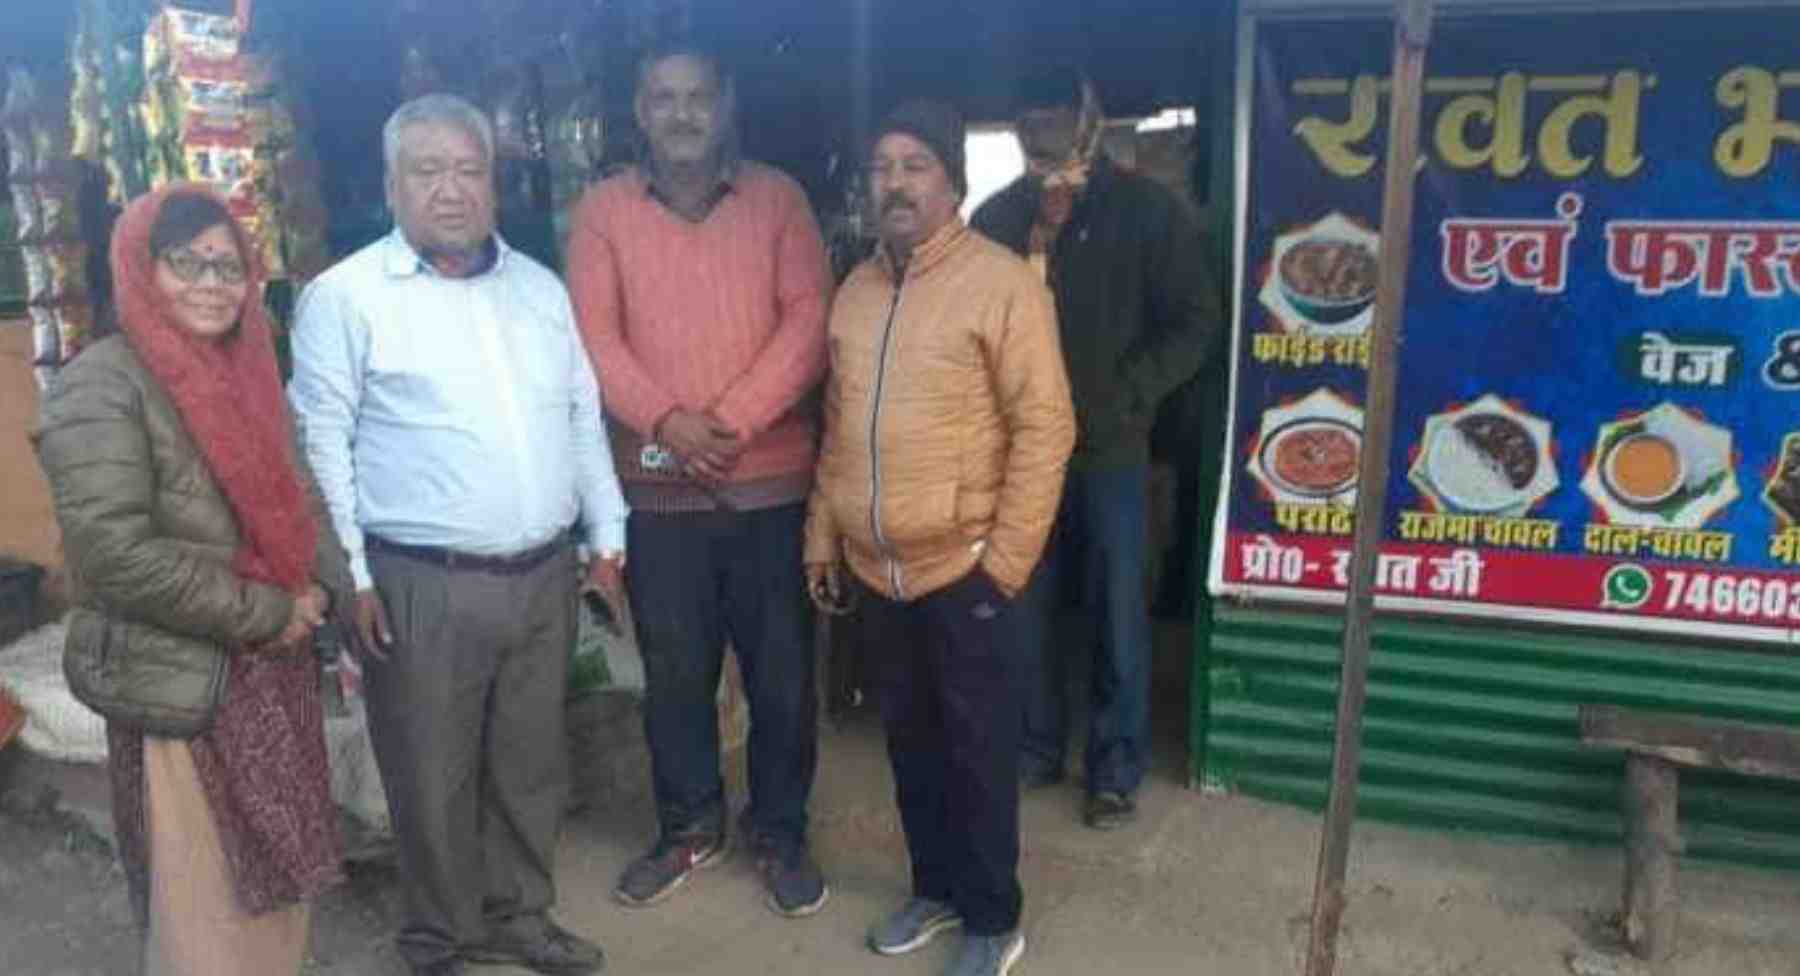 Uttarakhand news today: Pushkar Rawat set an example of honesty in Champawat, returned a bag full of gold to passenger. Champawat news today